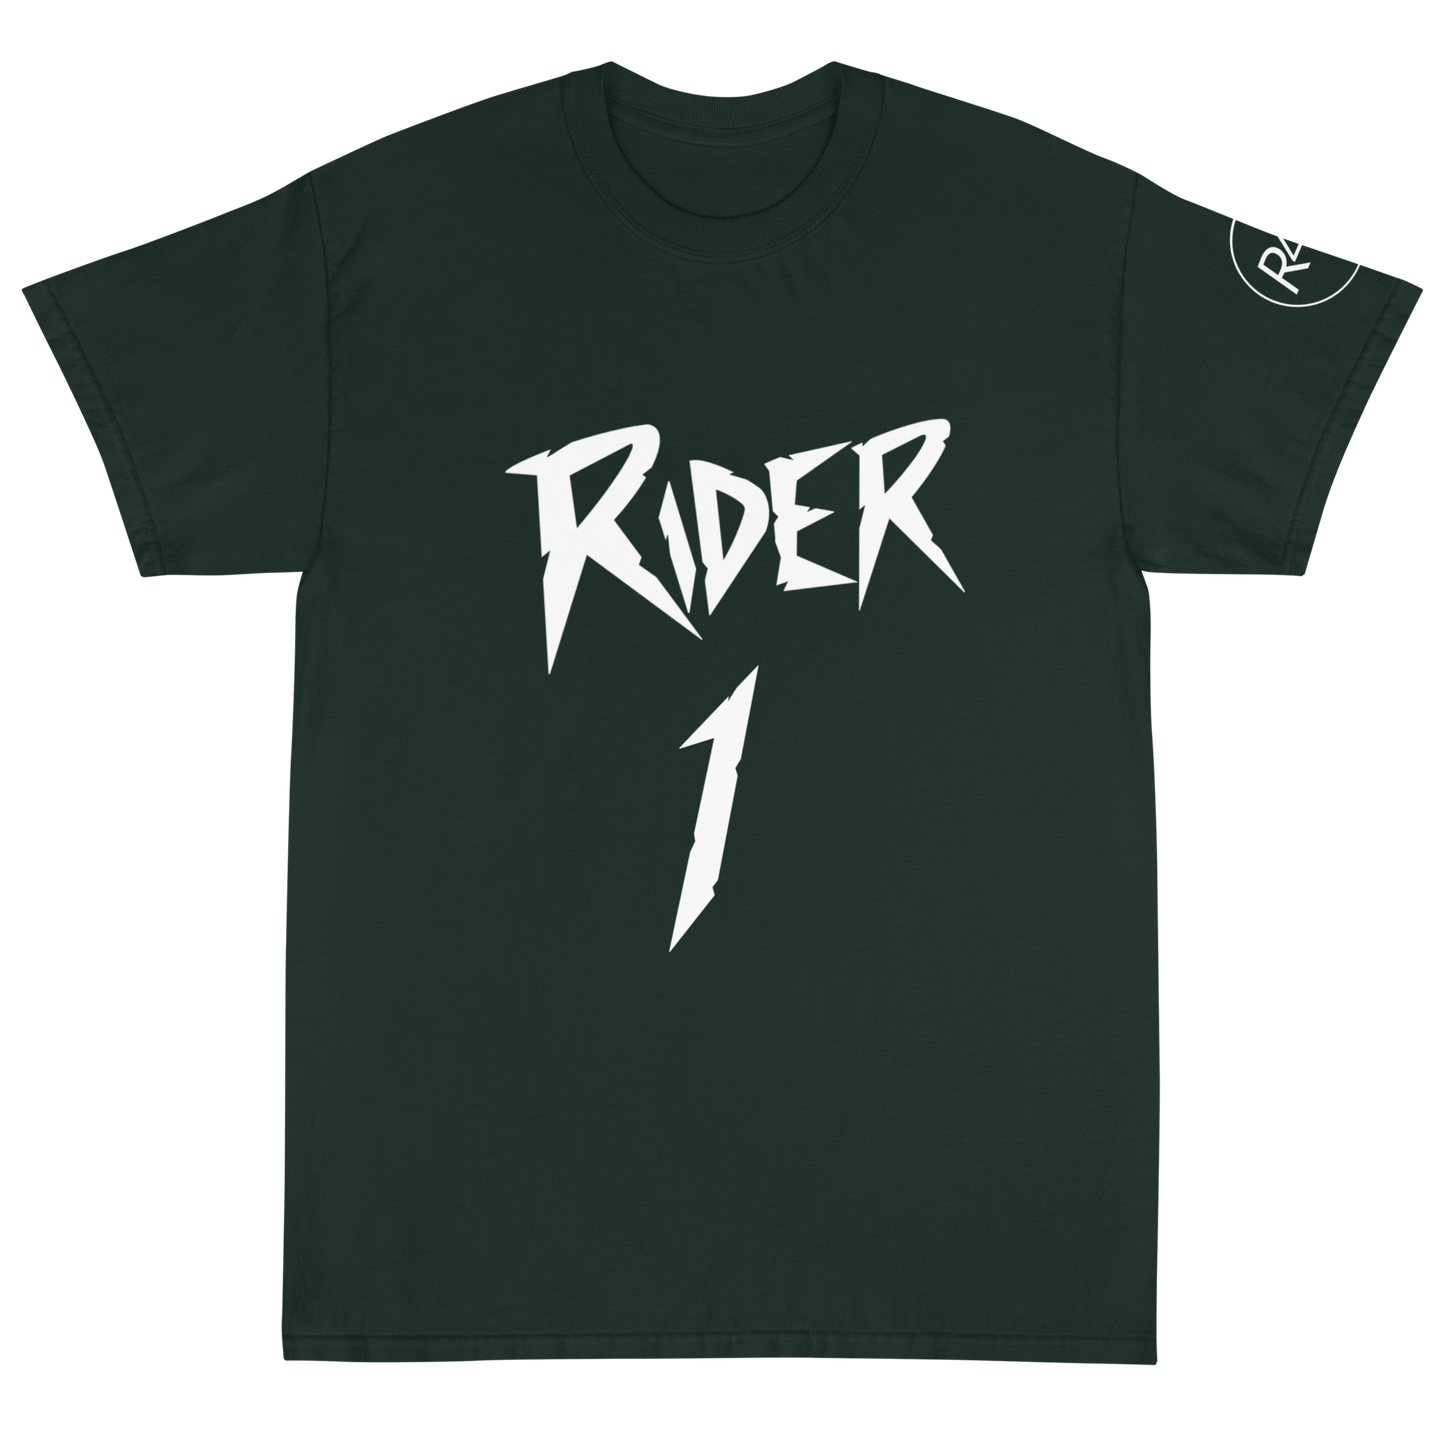 RIDER Jersey T-Shirt - Mr. Dripington